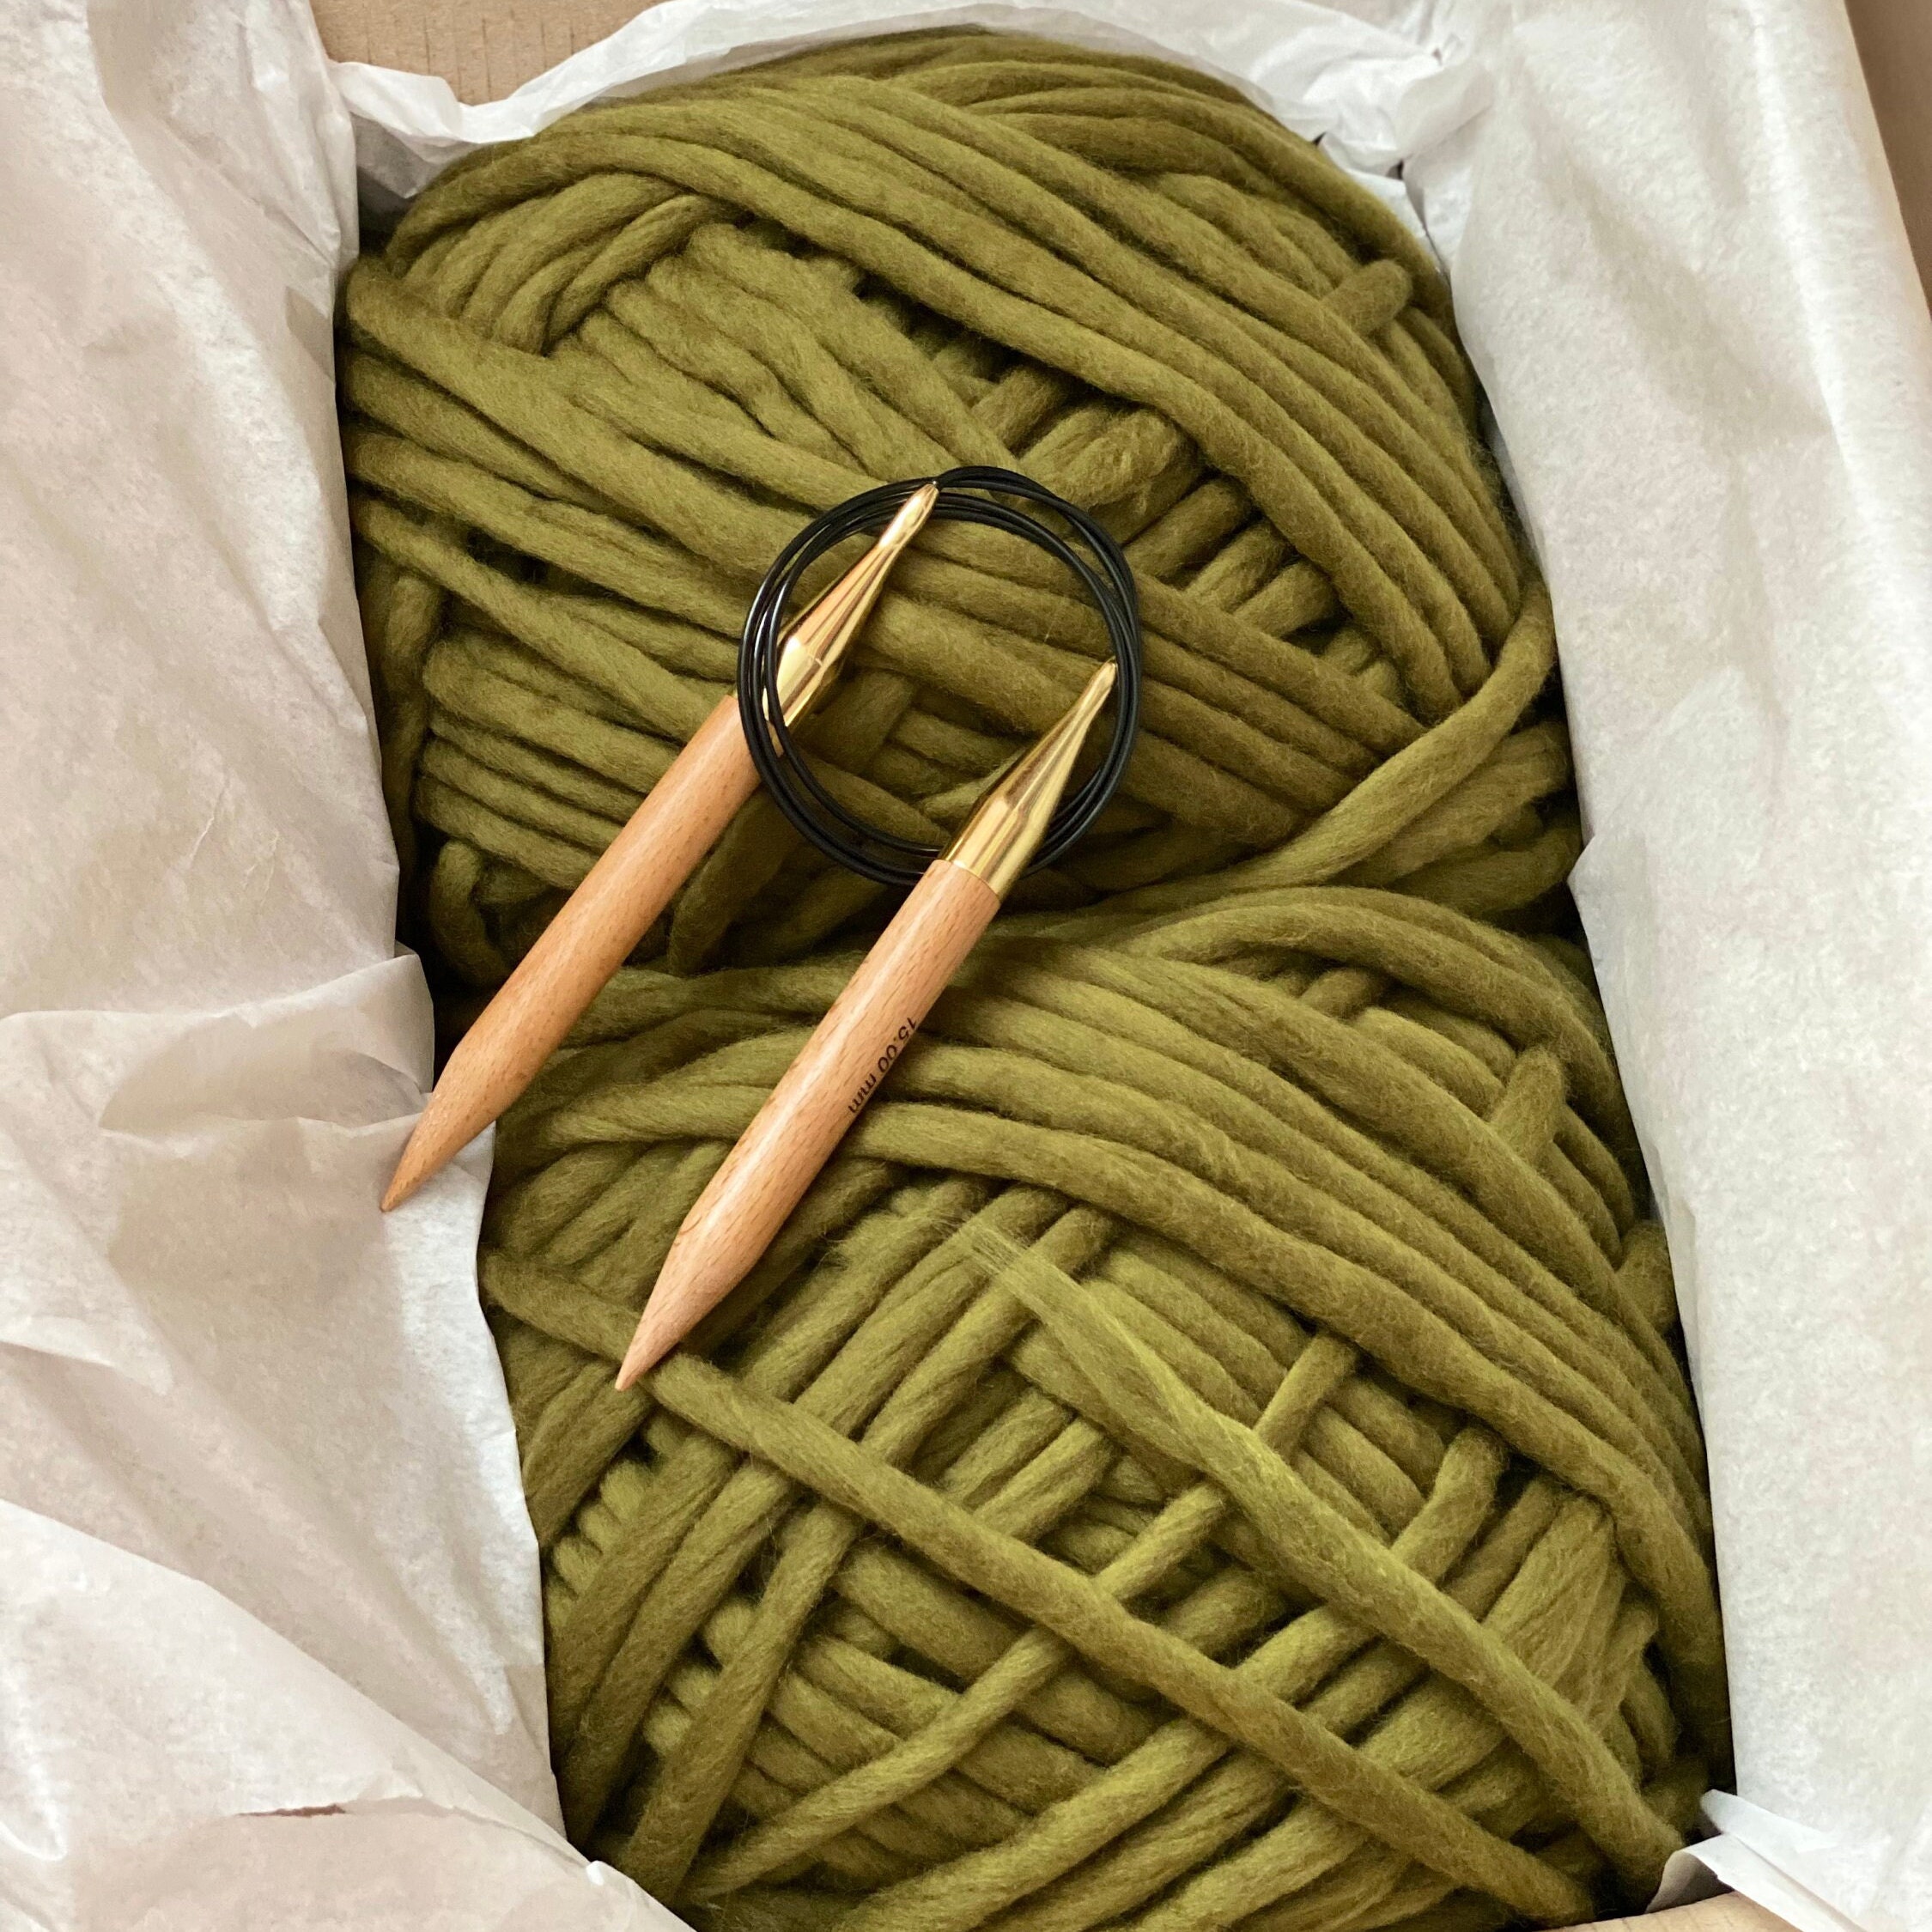 20mm Circular Knitting Needles Handmade Giant Knitting Needles